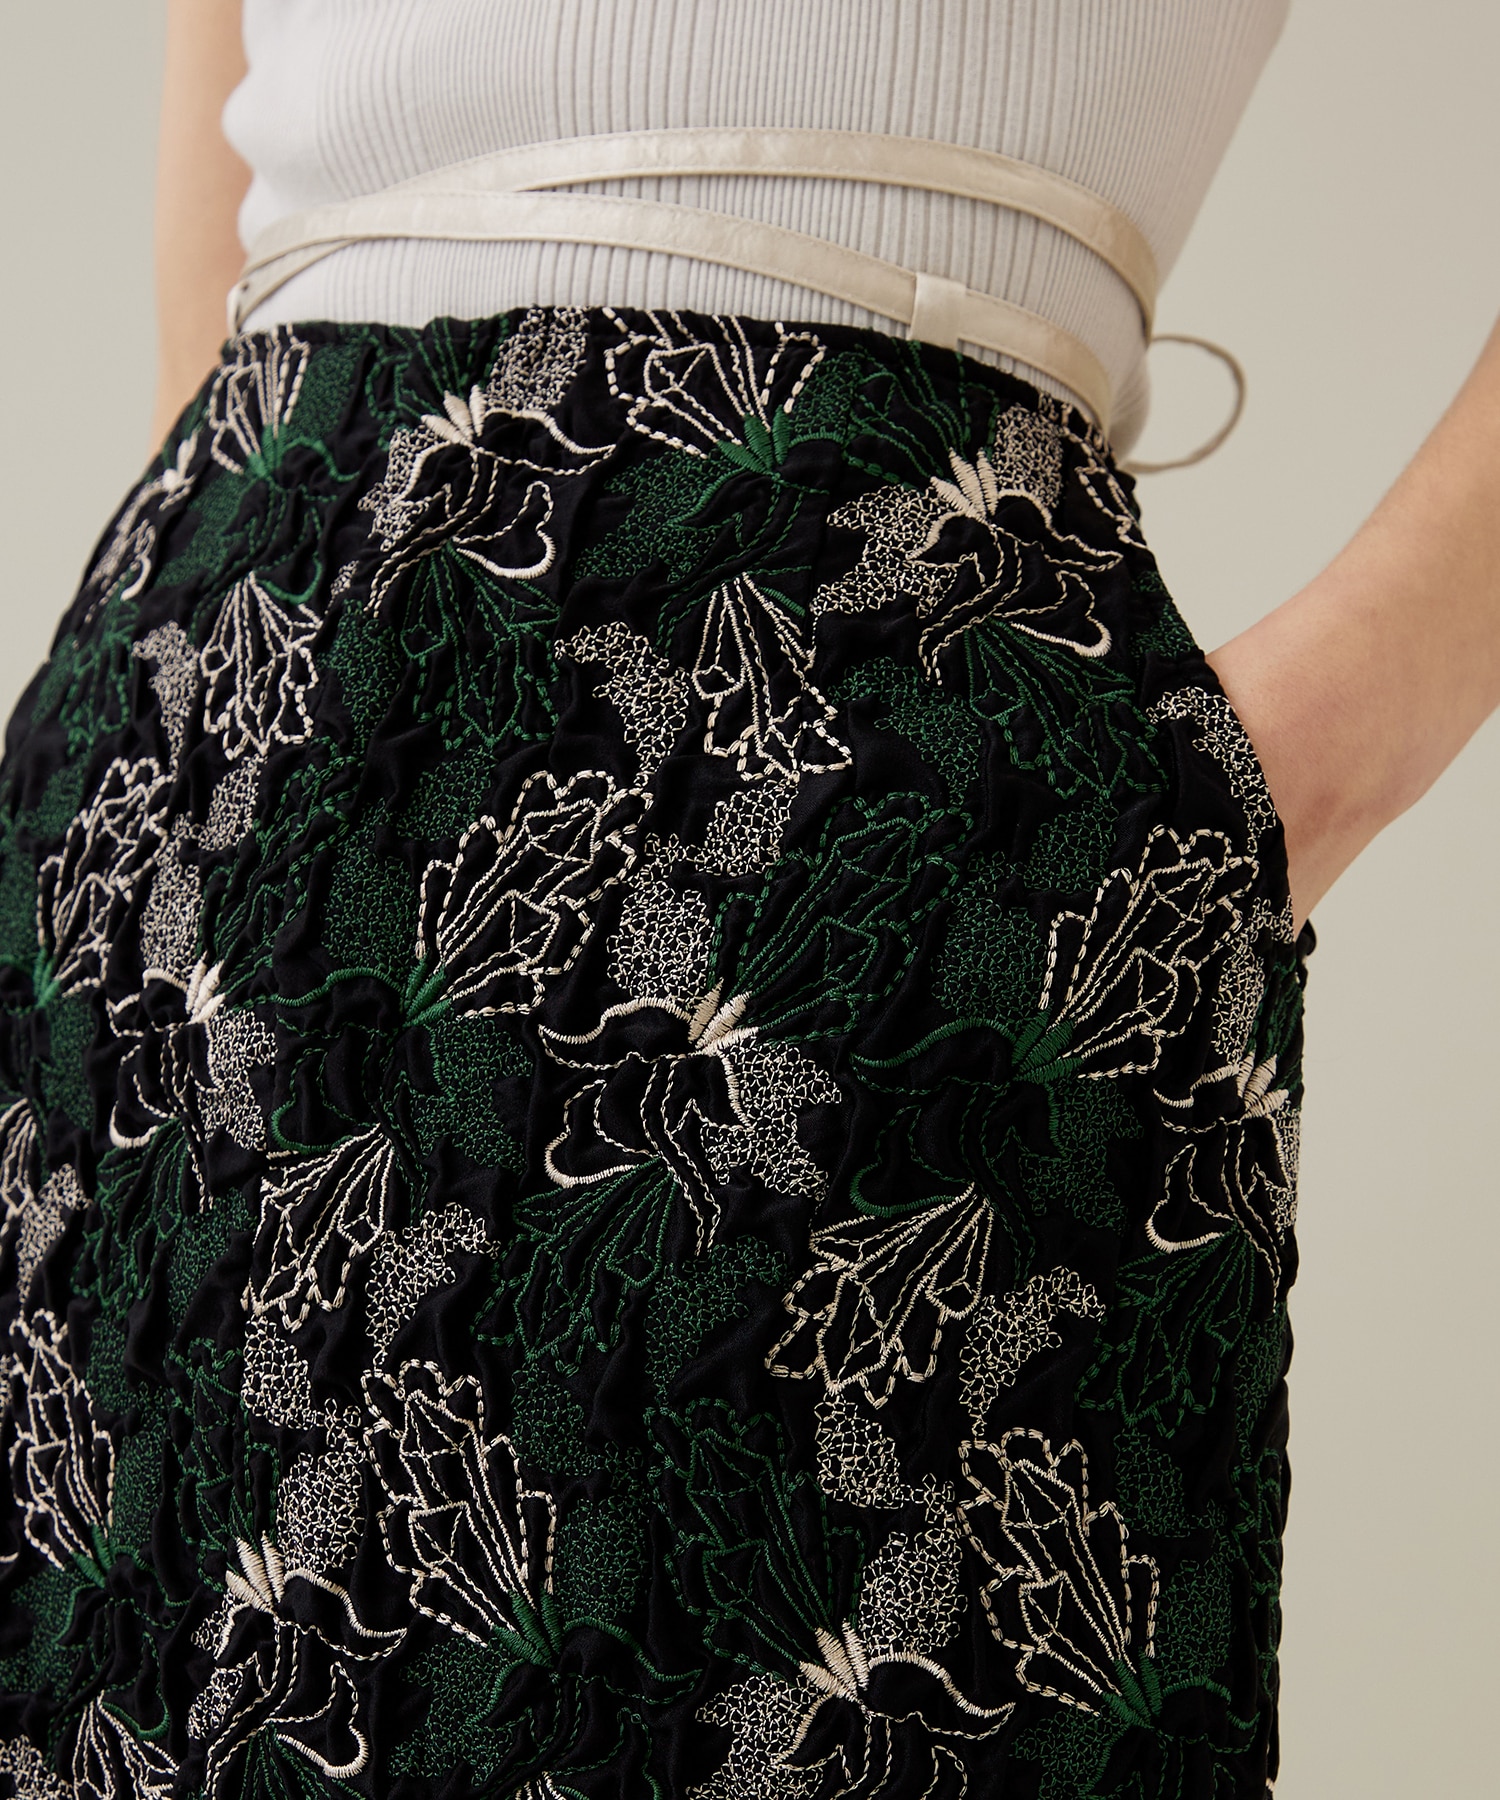 Quartz embroidery skirt